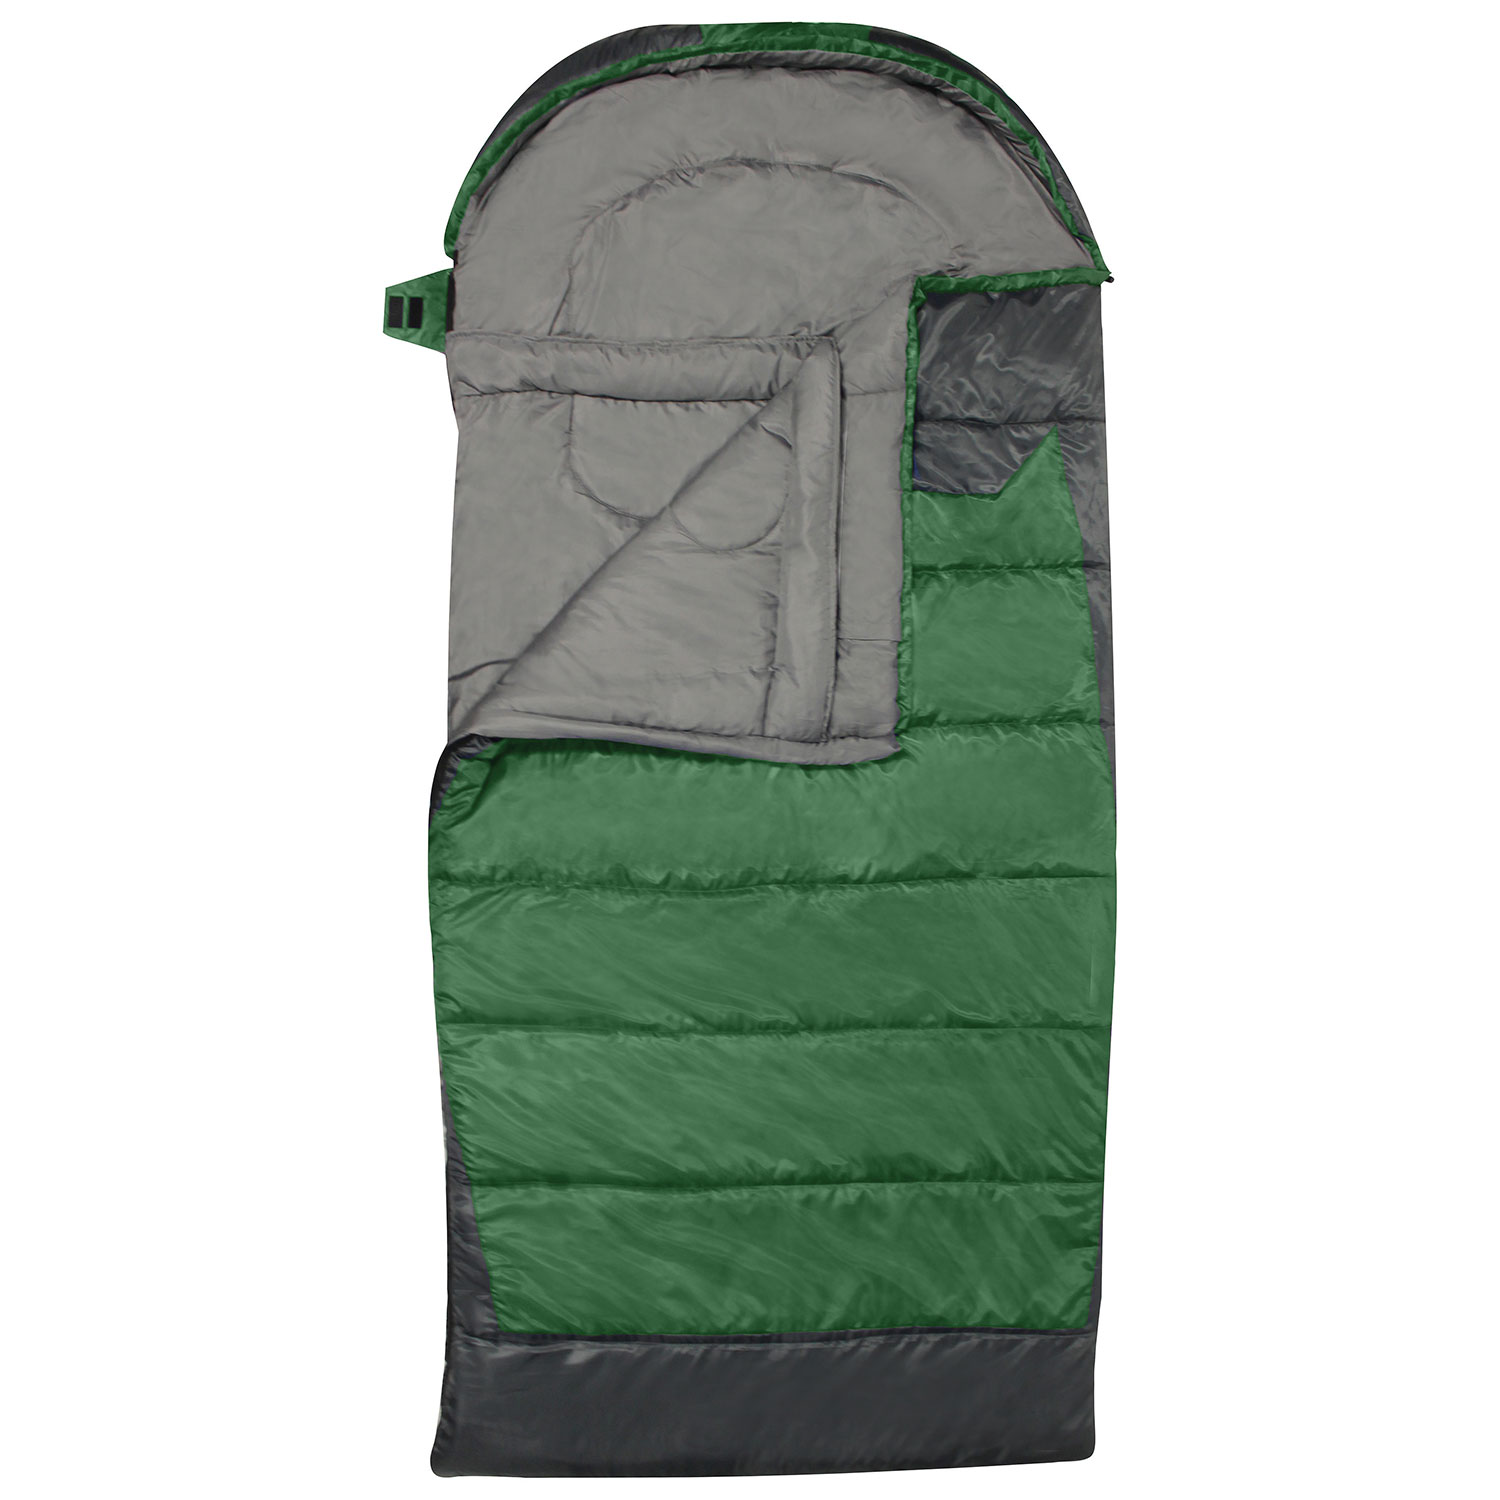 Rockwater Designs Rectangular Heat Zone Sleeping Bag (0-Degrees Celcius) - Forest/Dark Grey